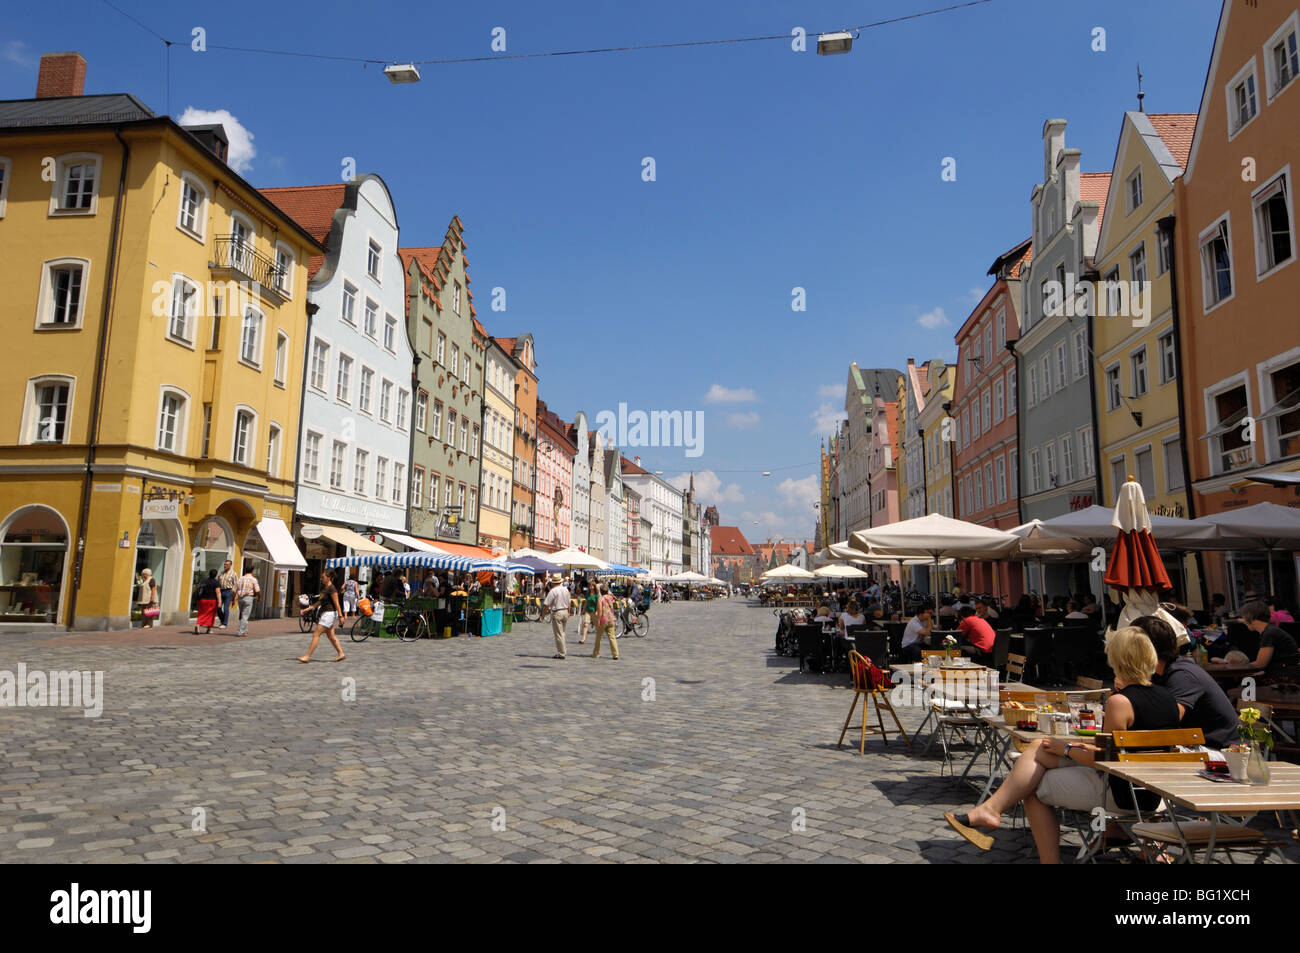 Altstadt, Landshut, Bavaria, Germany, Europe Stock Photo